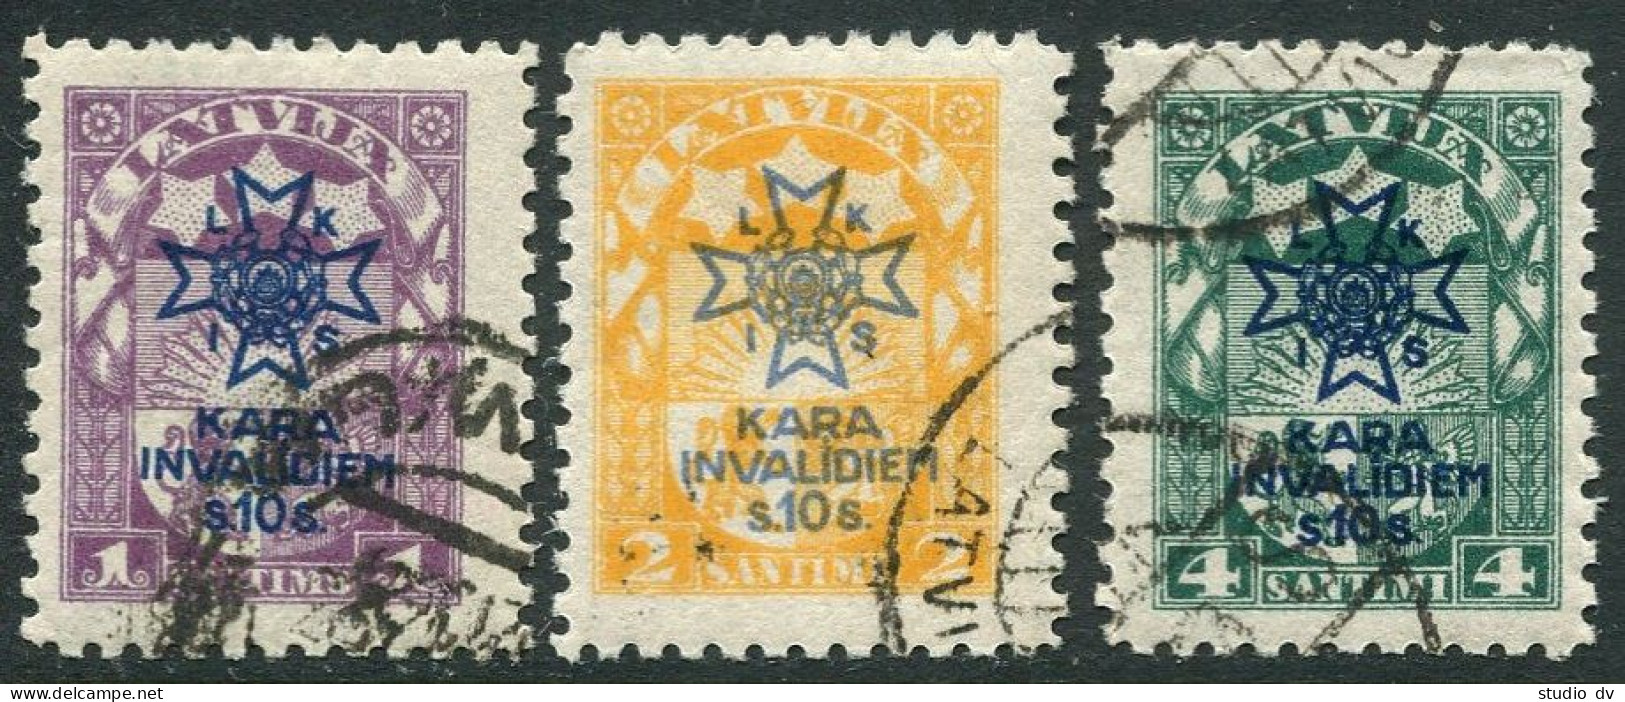 Latvia B21-B23, Used. Michel 100-102. Latvian War Invalids Society, 1923. - Lettland